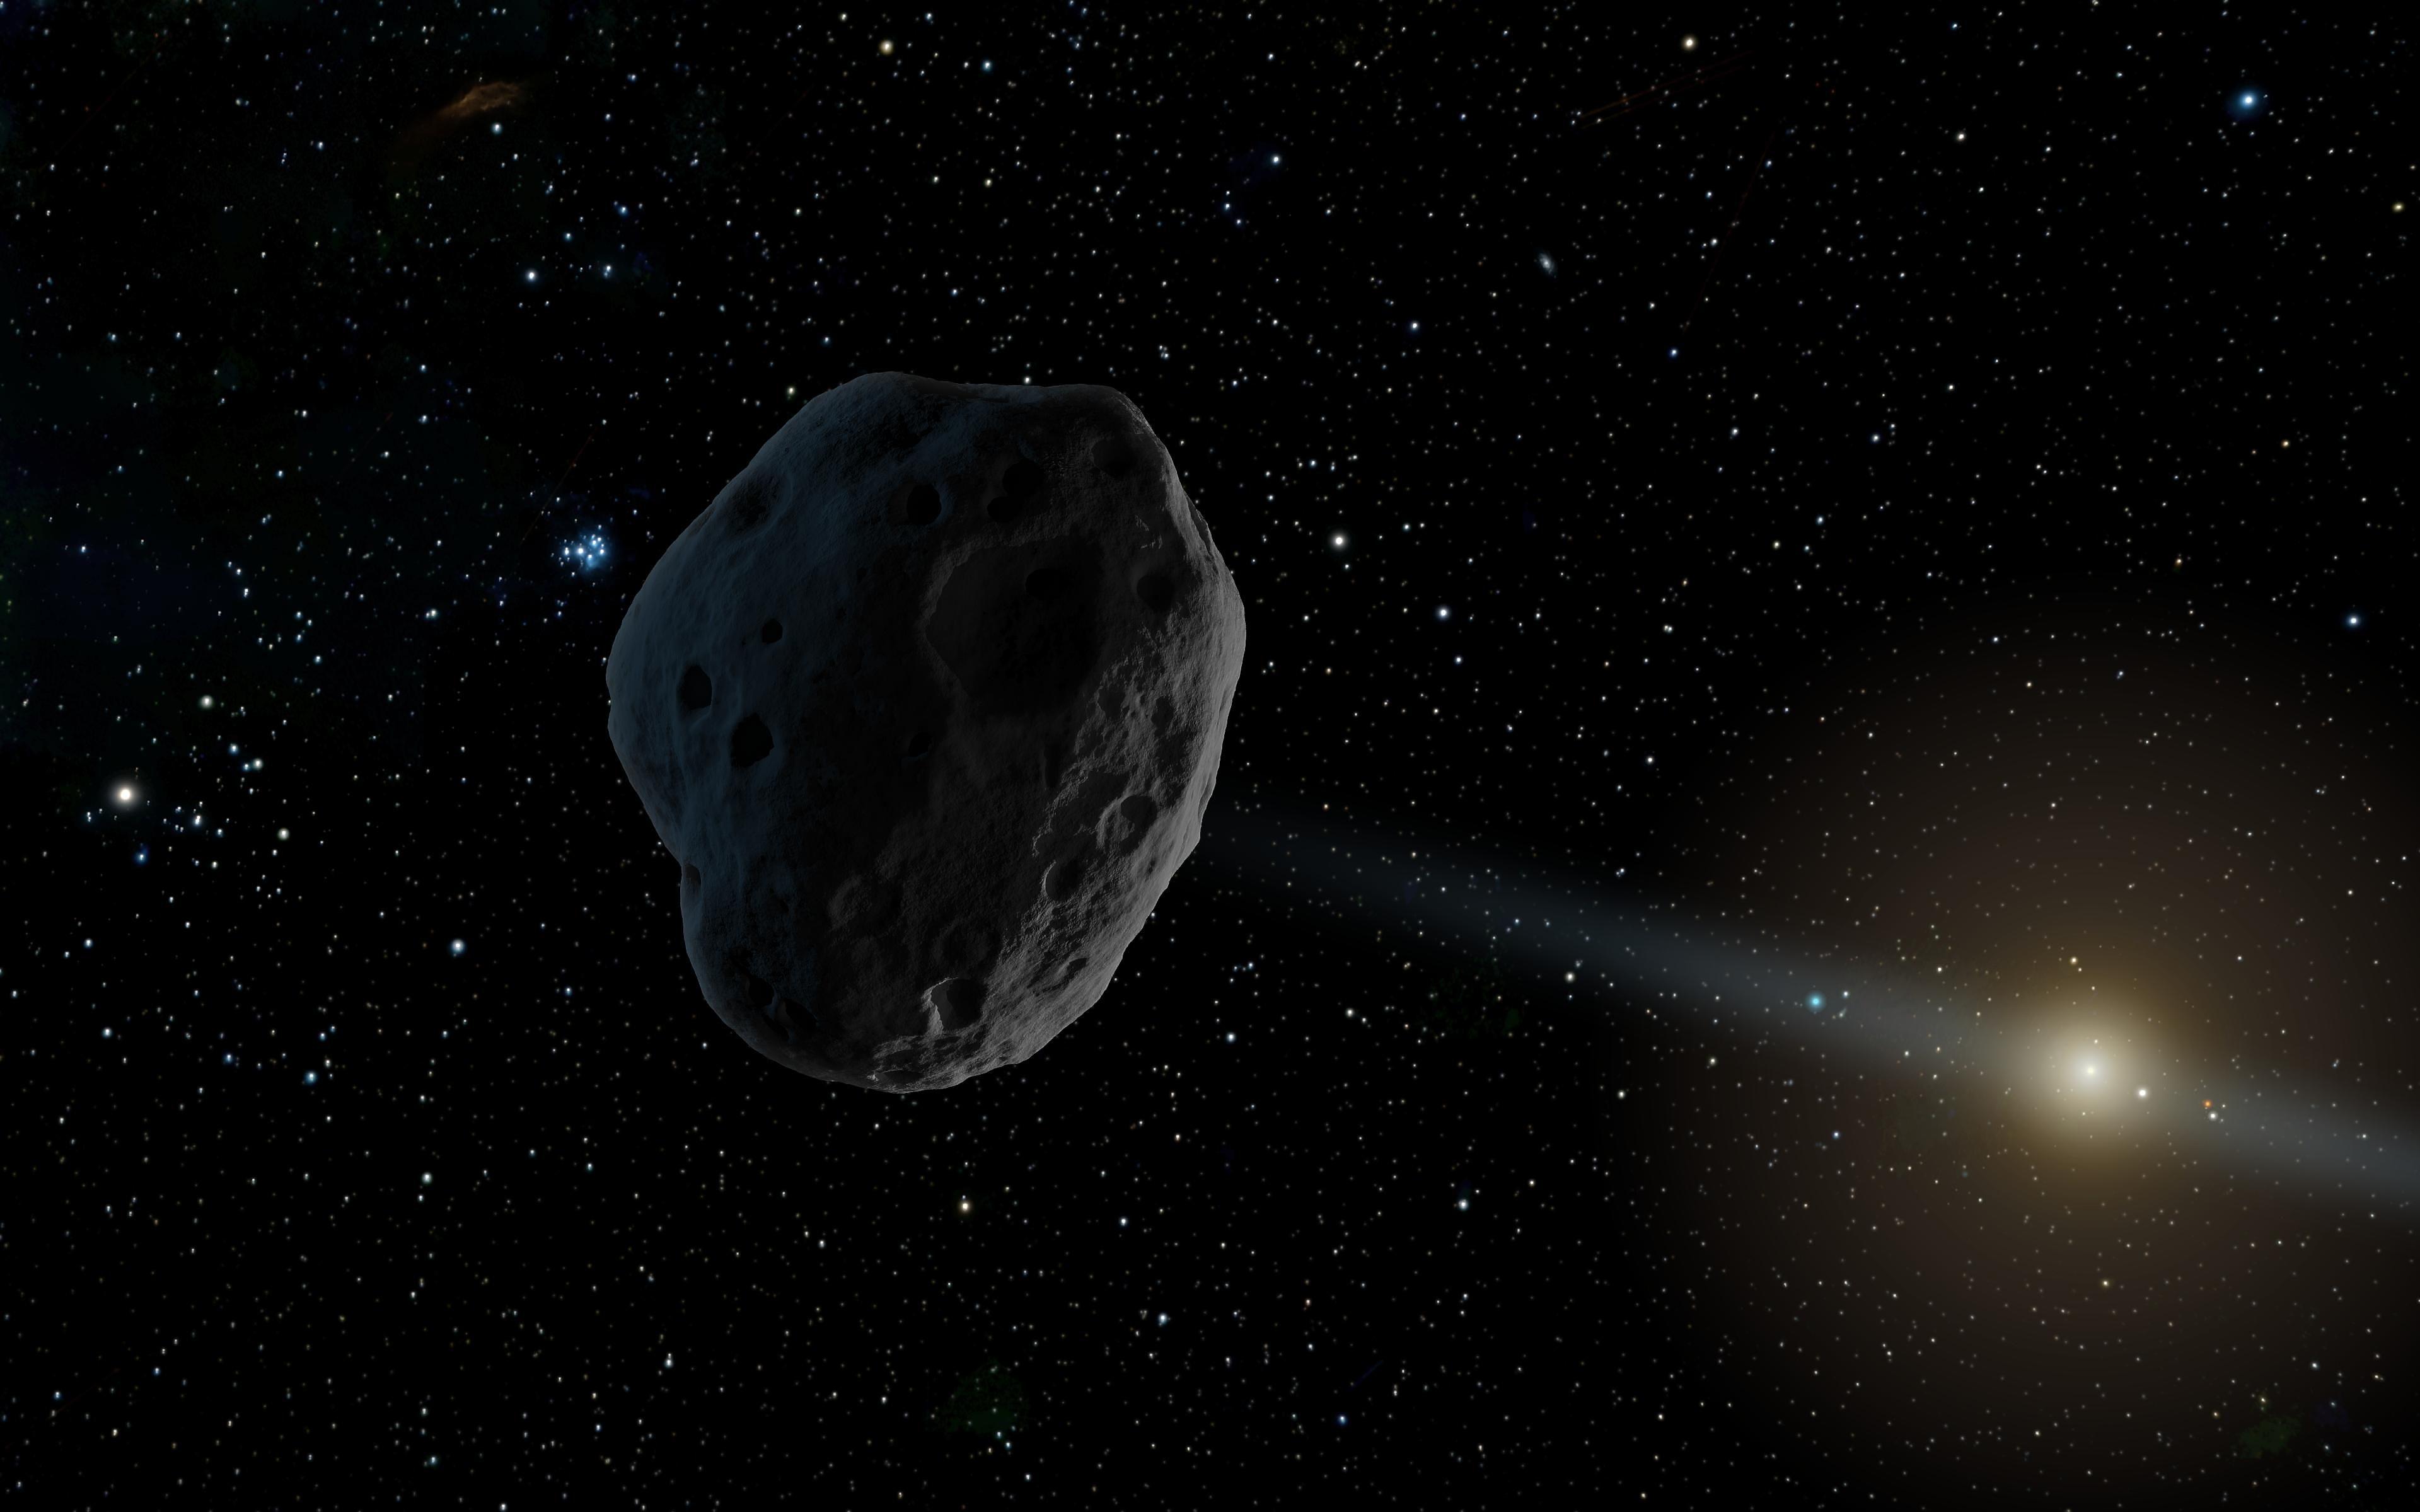 2015 BZ509: un asteroide interestelar